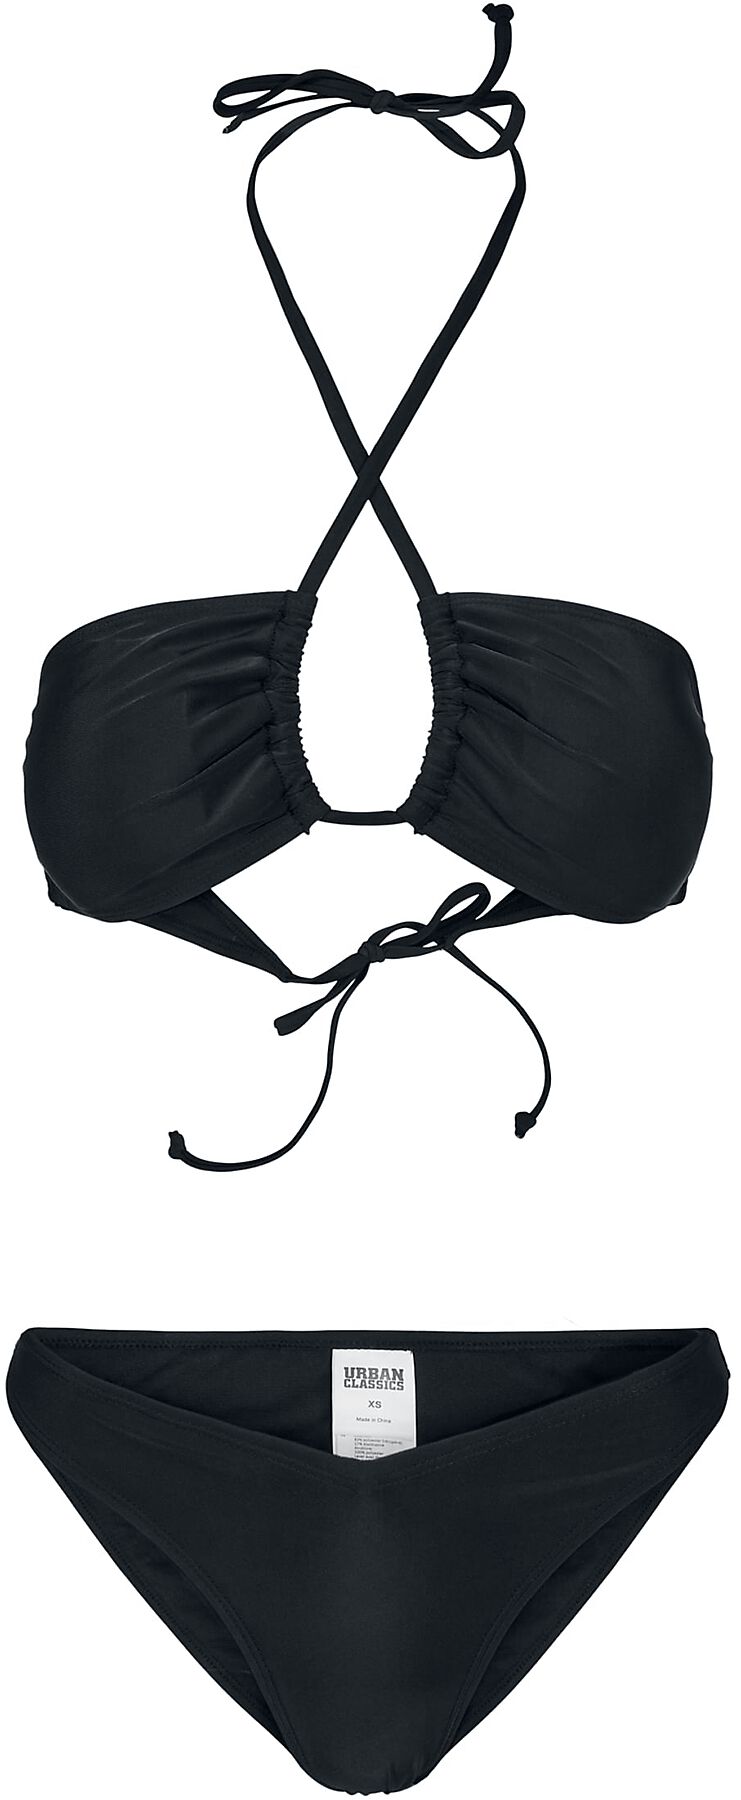 Urban Classics Ladies Recycled Hot V Bikini Bikini Set schwarz  - Onlineshop EMP